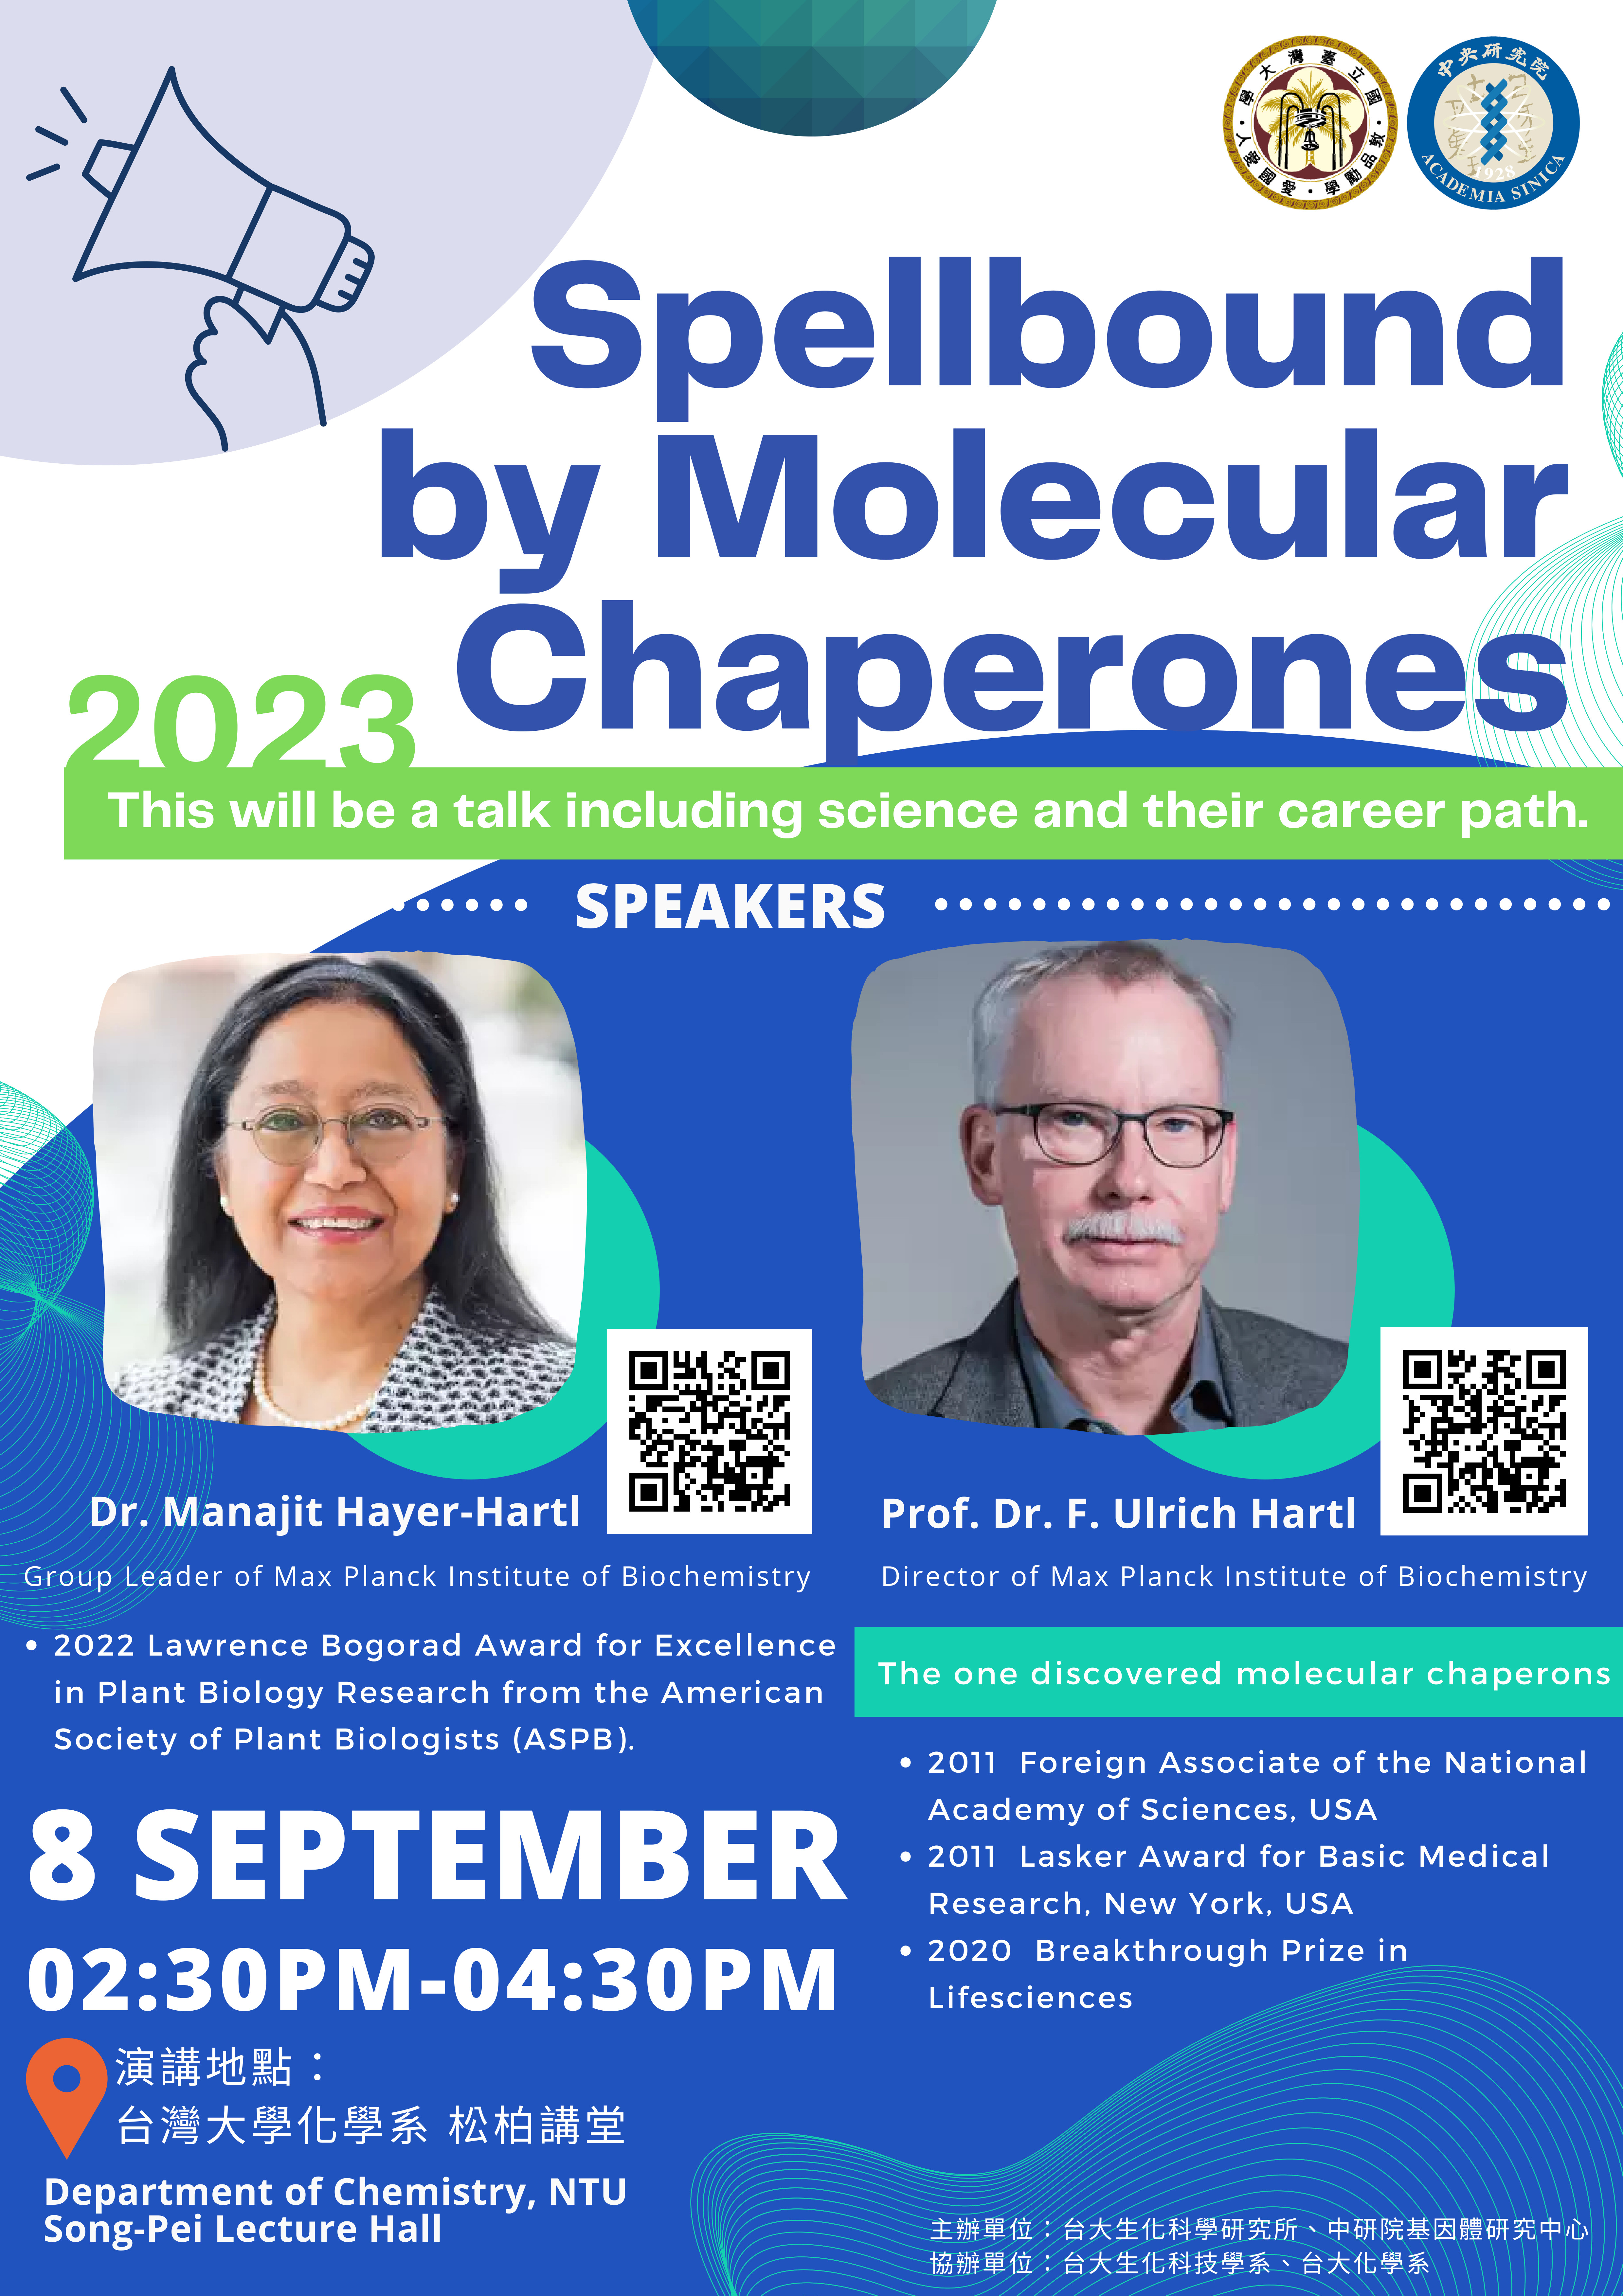 academic speech (9/8/2023) Prof. Dr. F. Ulrich Hartl & Dr. Manajit Hayer-Hartl -「Spellbound by Molecular Chaperones」